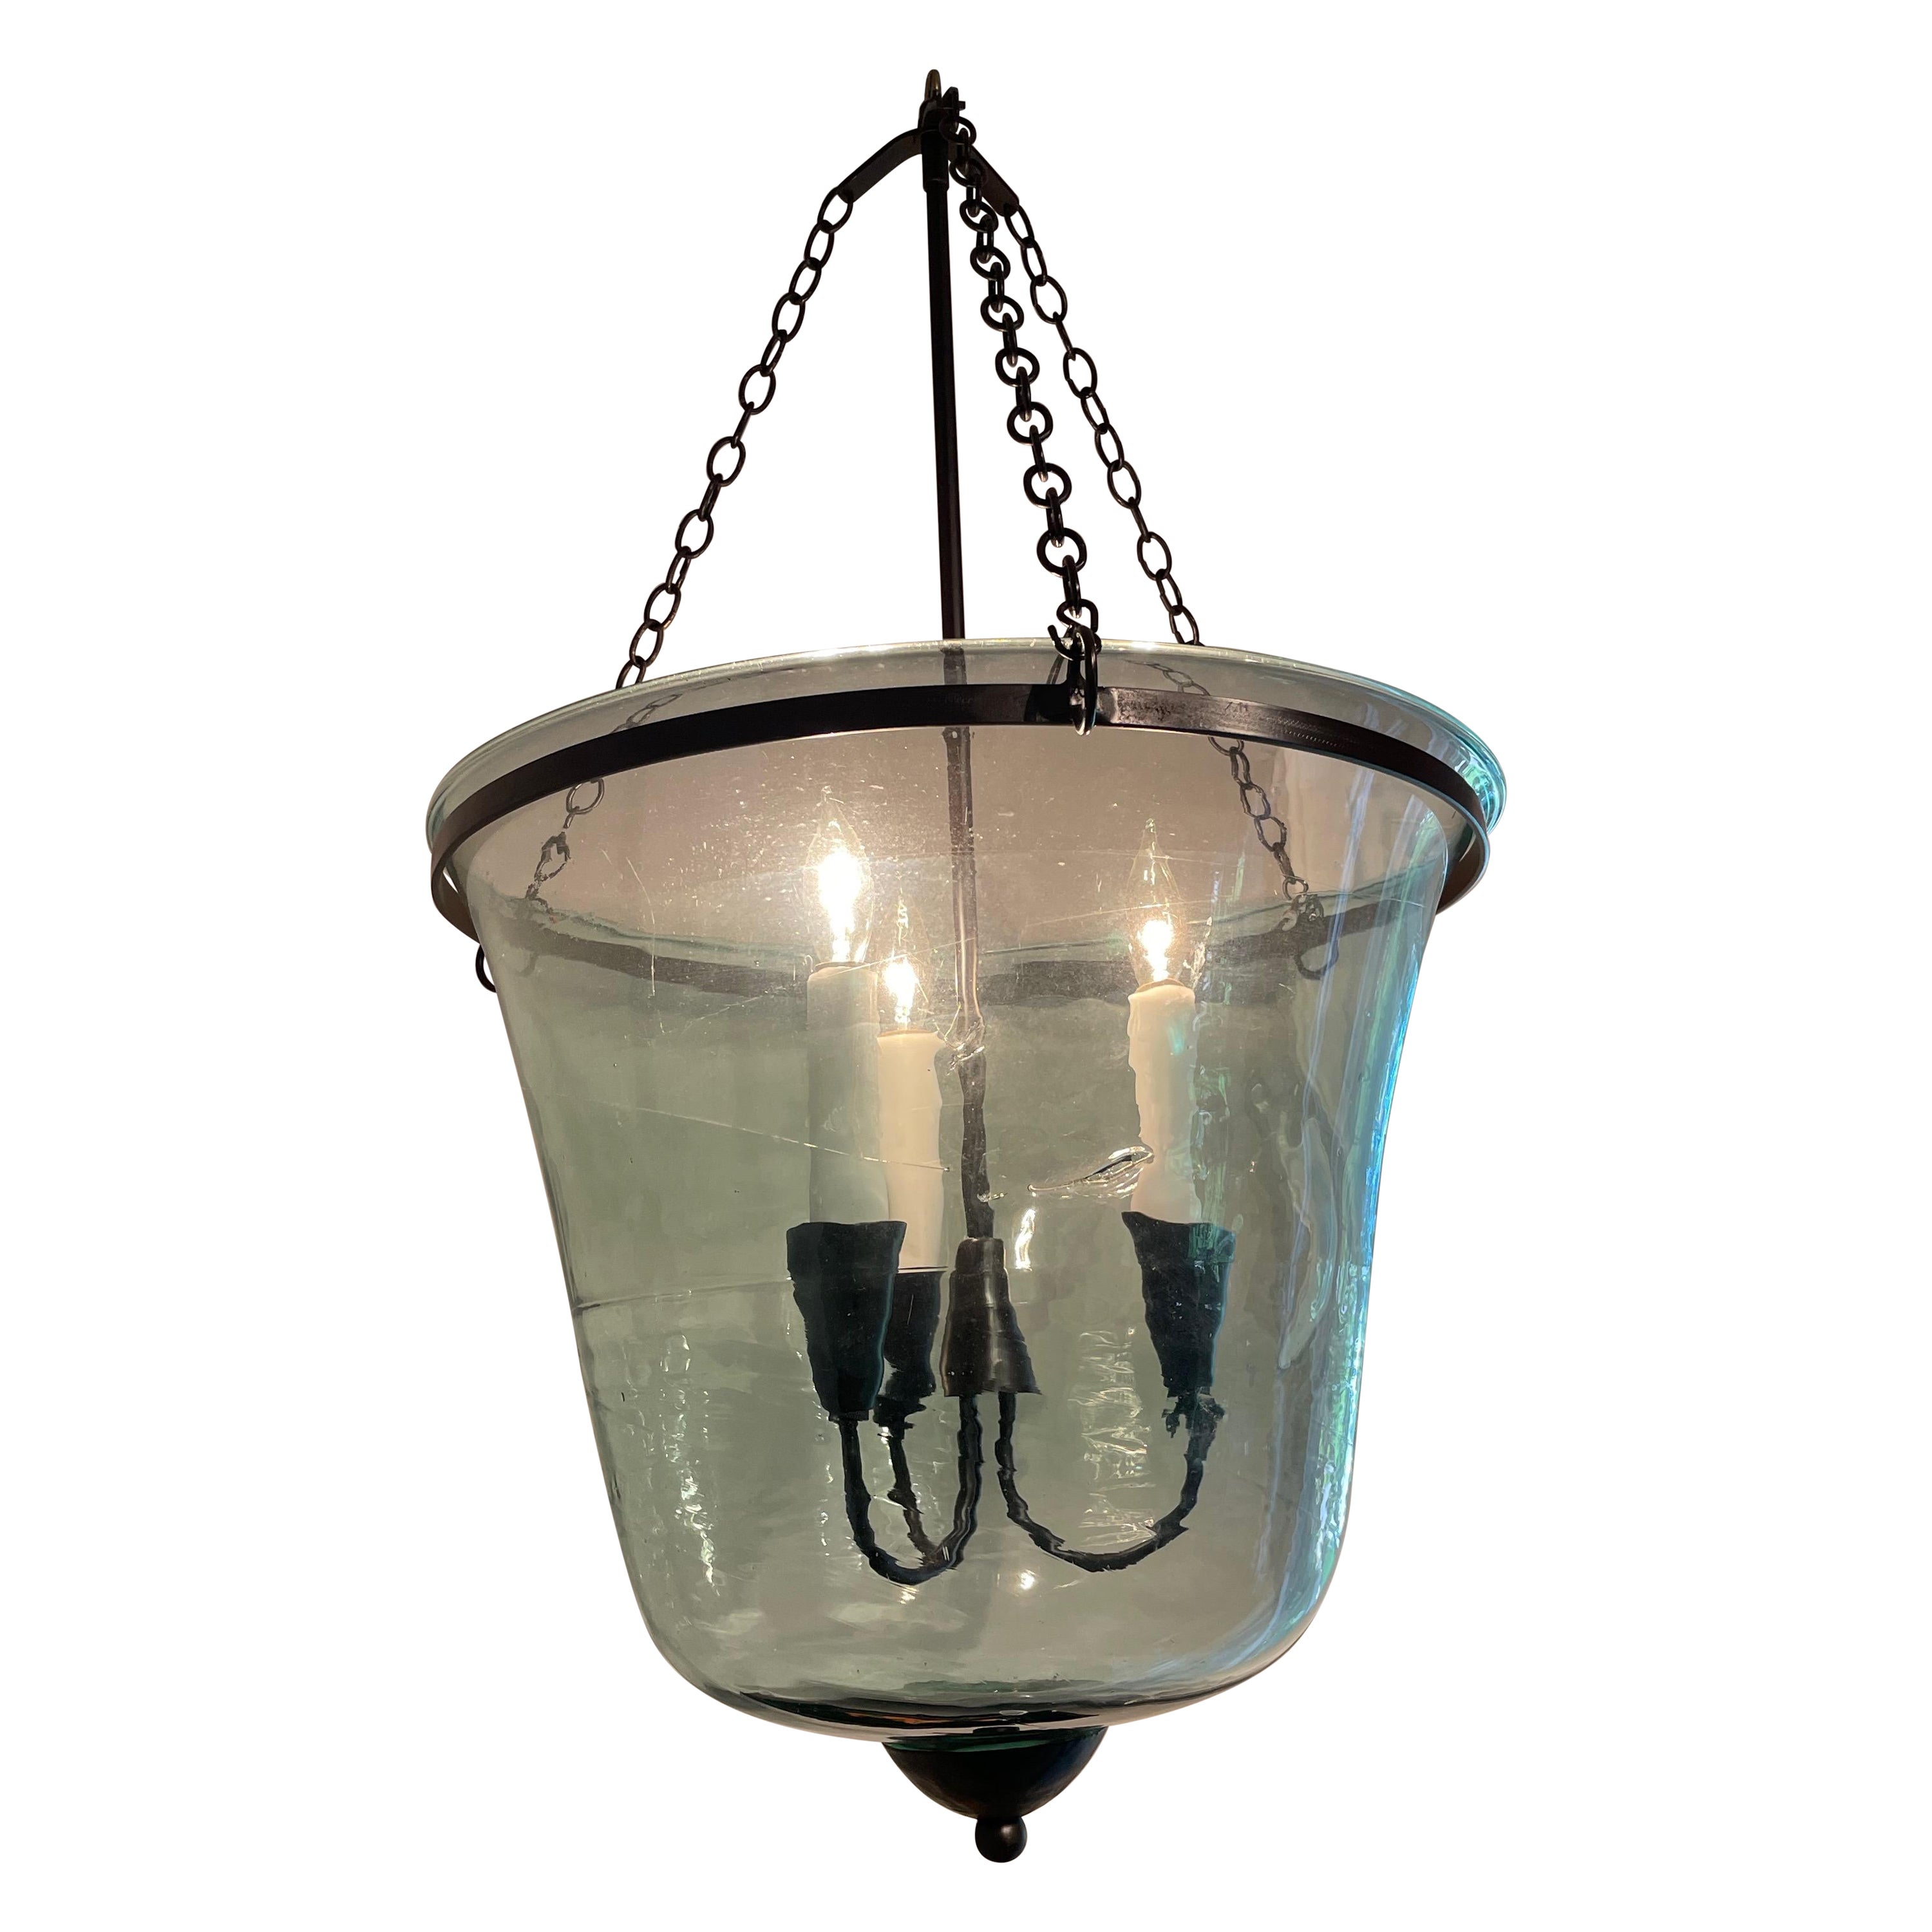 French 19th Century Handblown Glass Bell Cloche Hanging Light